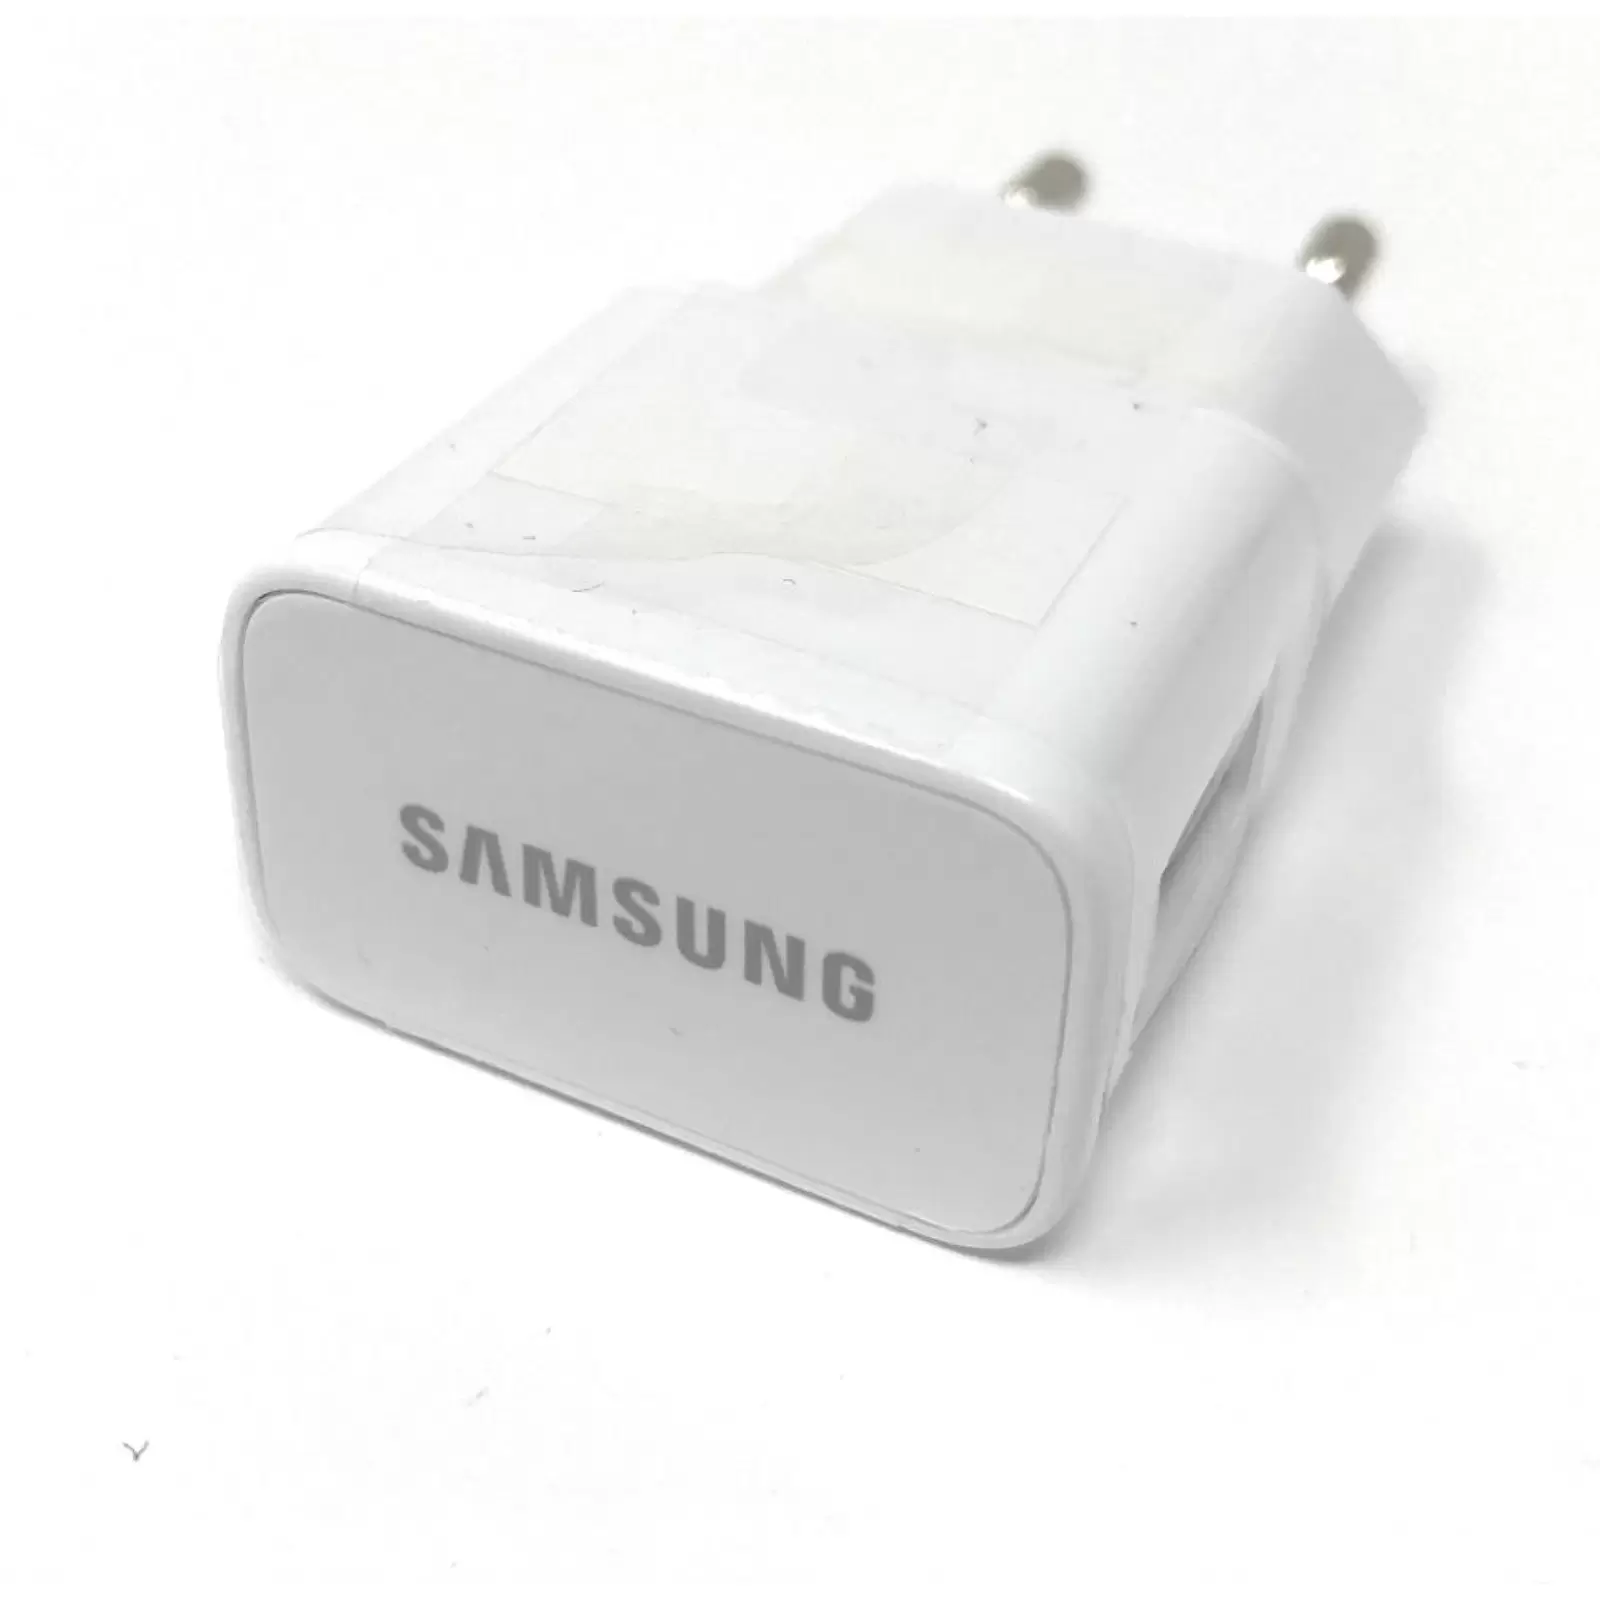 Original Samsung Ladegerät / Lade-Adapter für Samsung Galaxy S3 / S3 mini /S5/S6/S7 2,0Ah Weiß